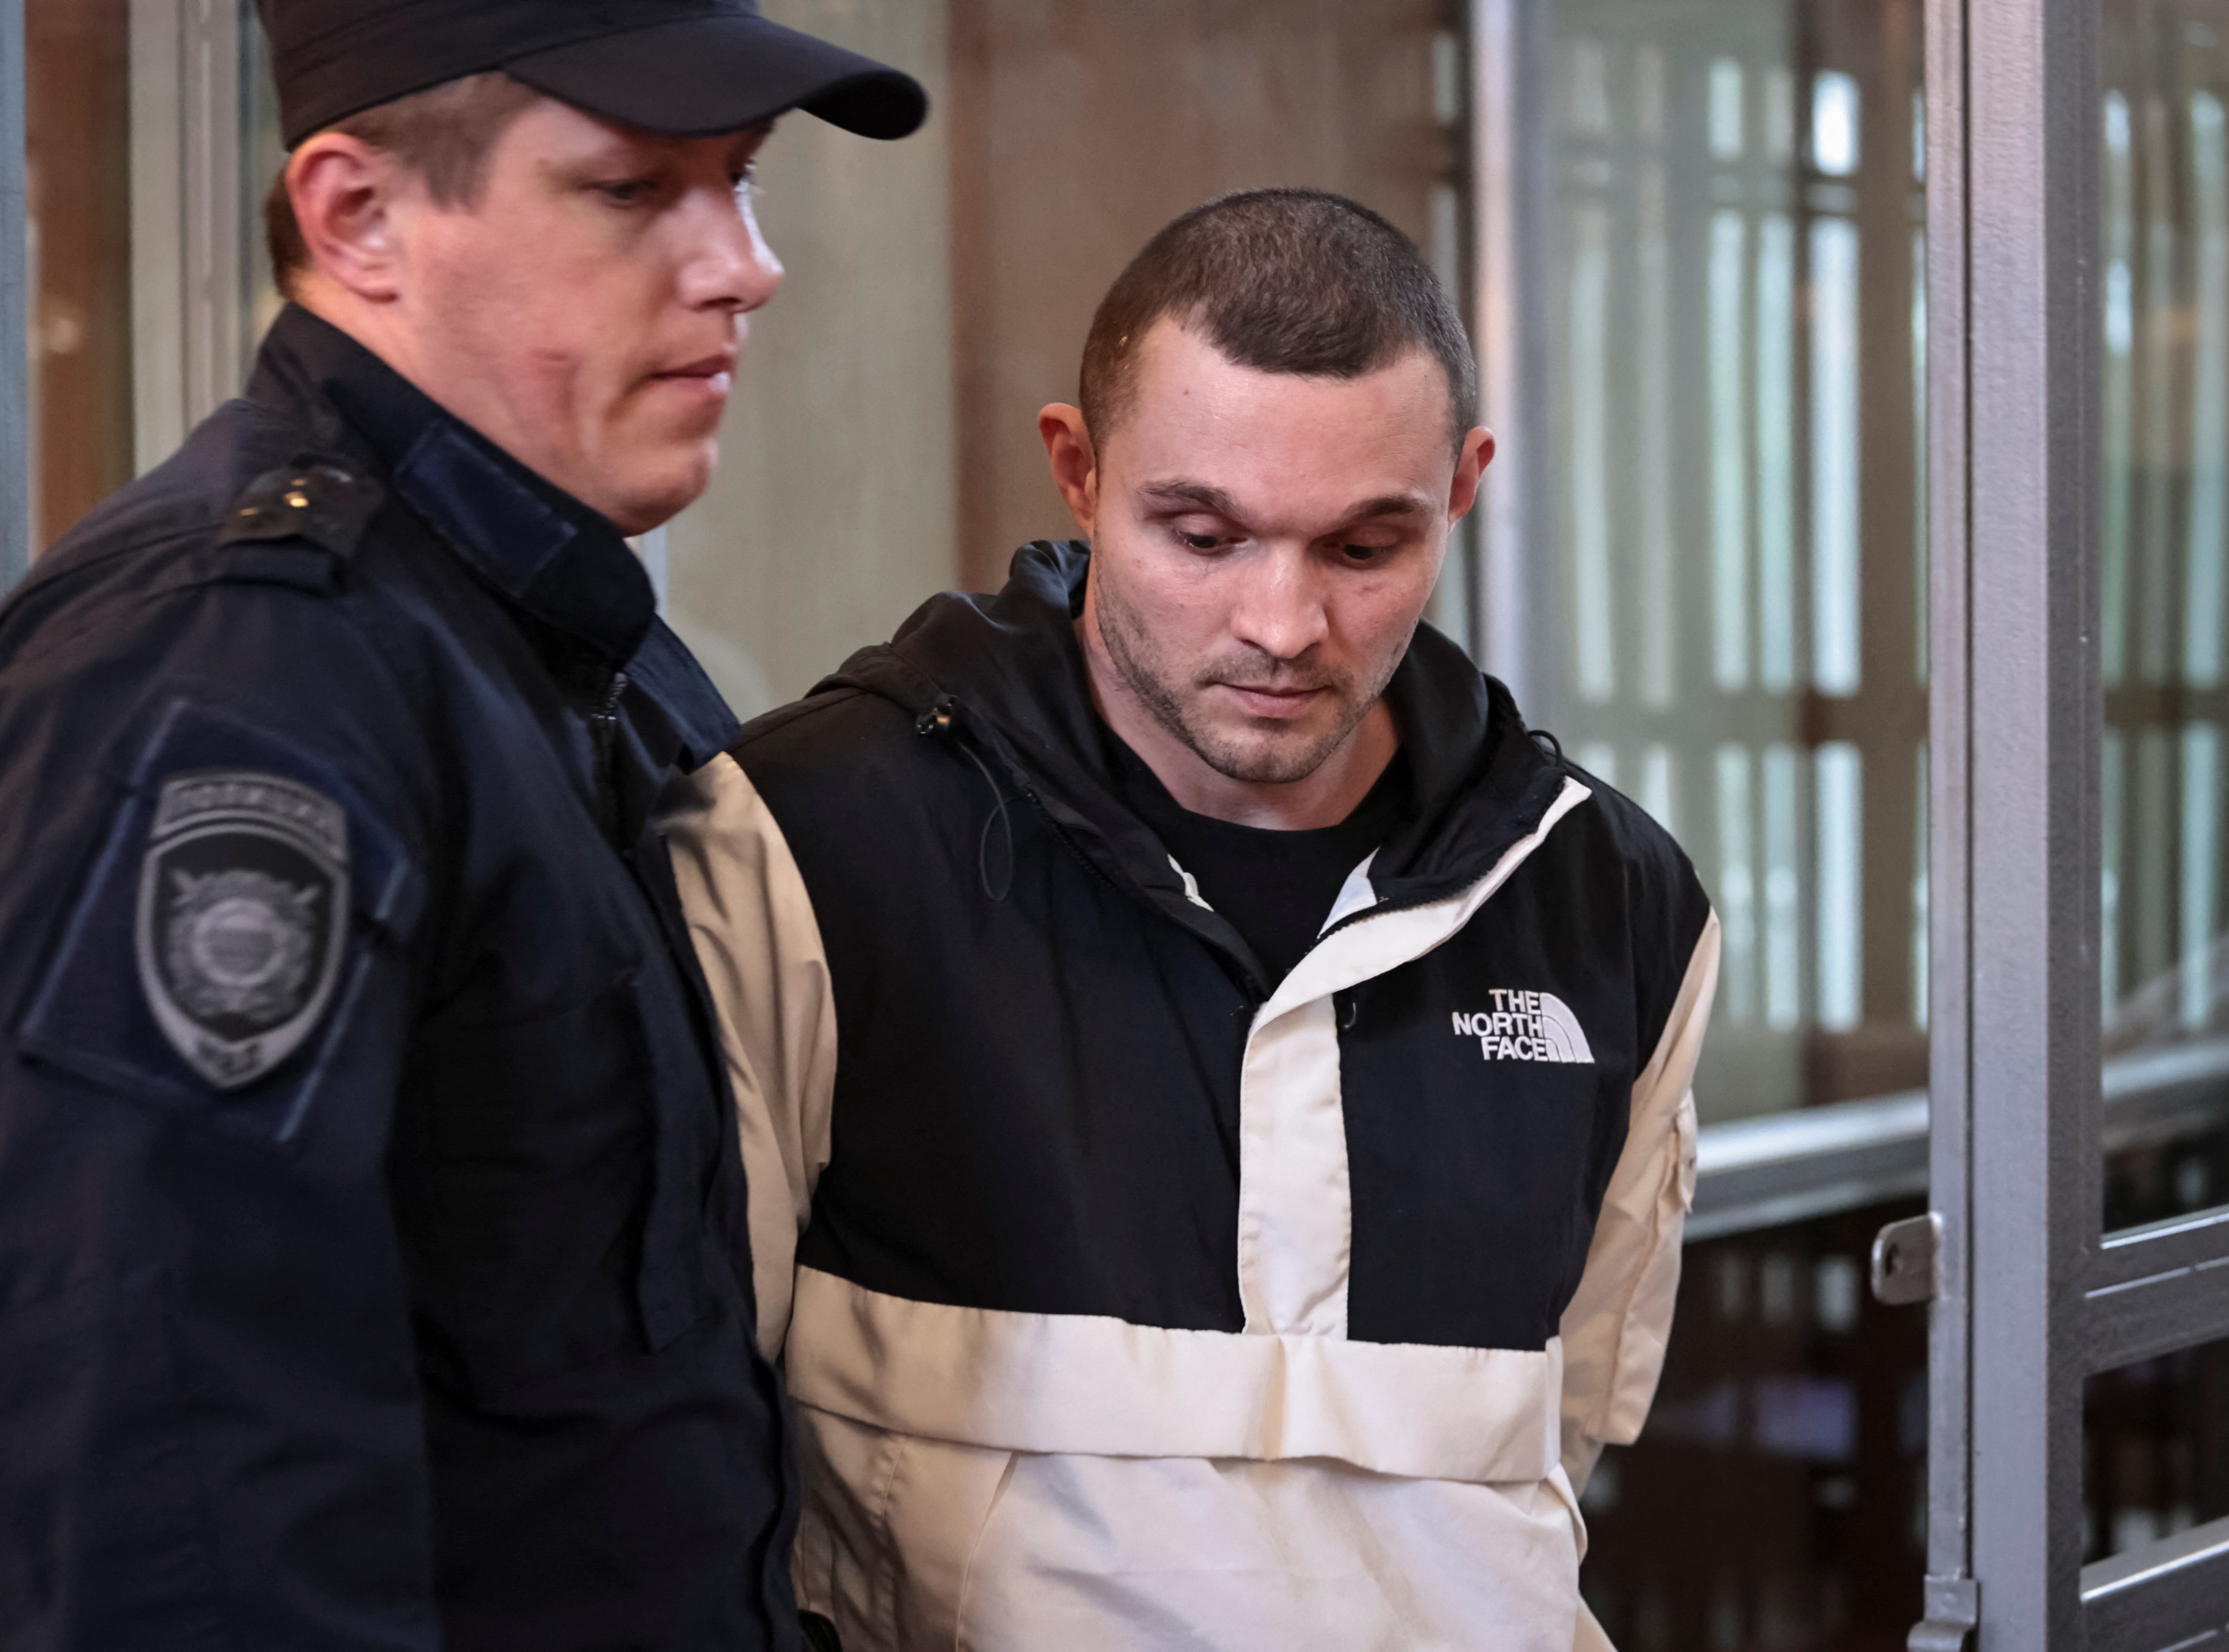 Gordon Black, a U.S. Army staff sergeant detained in Russia, appears in court in Vladivostok